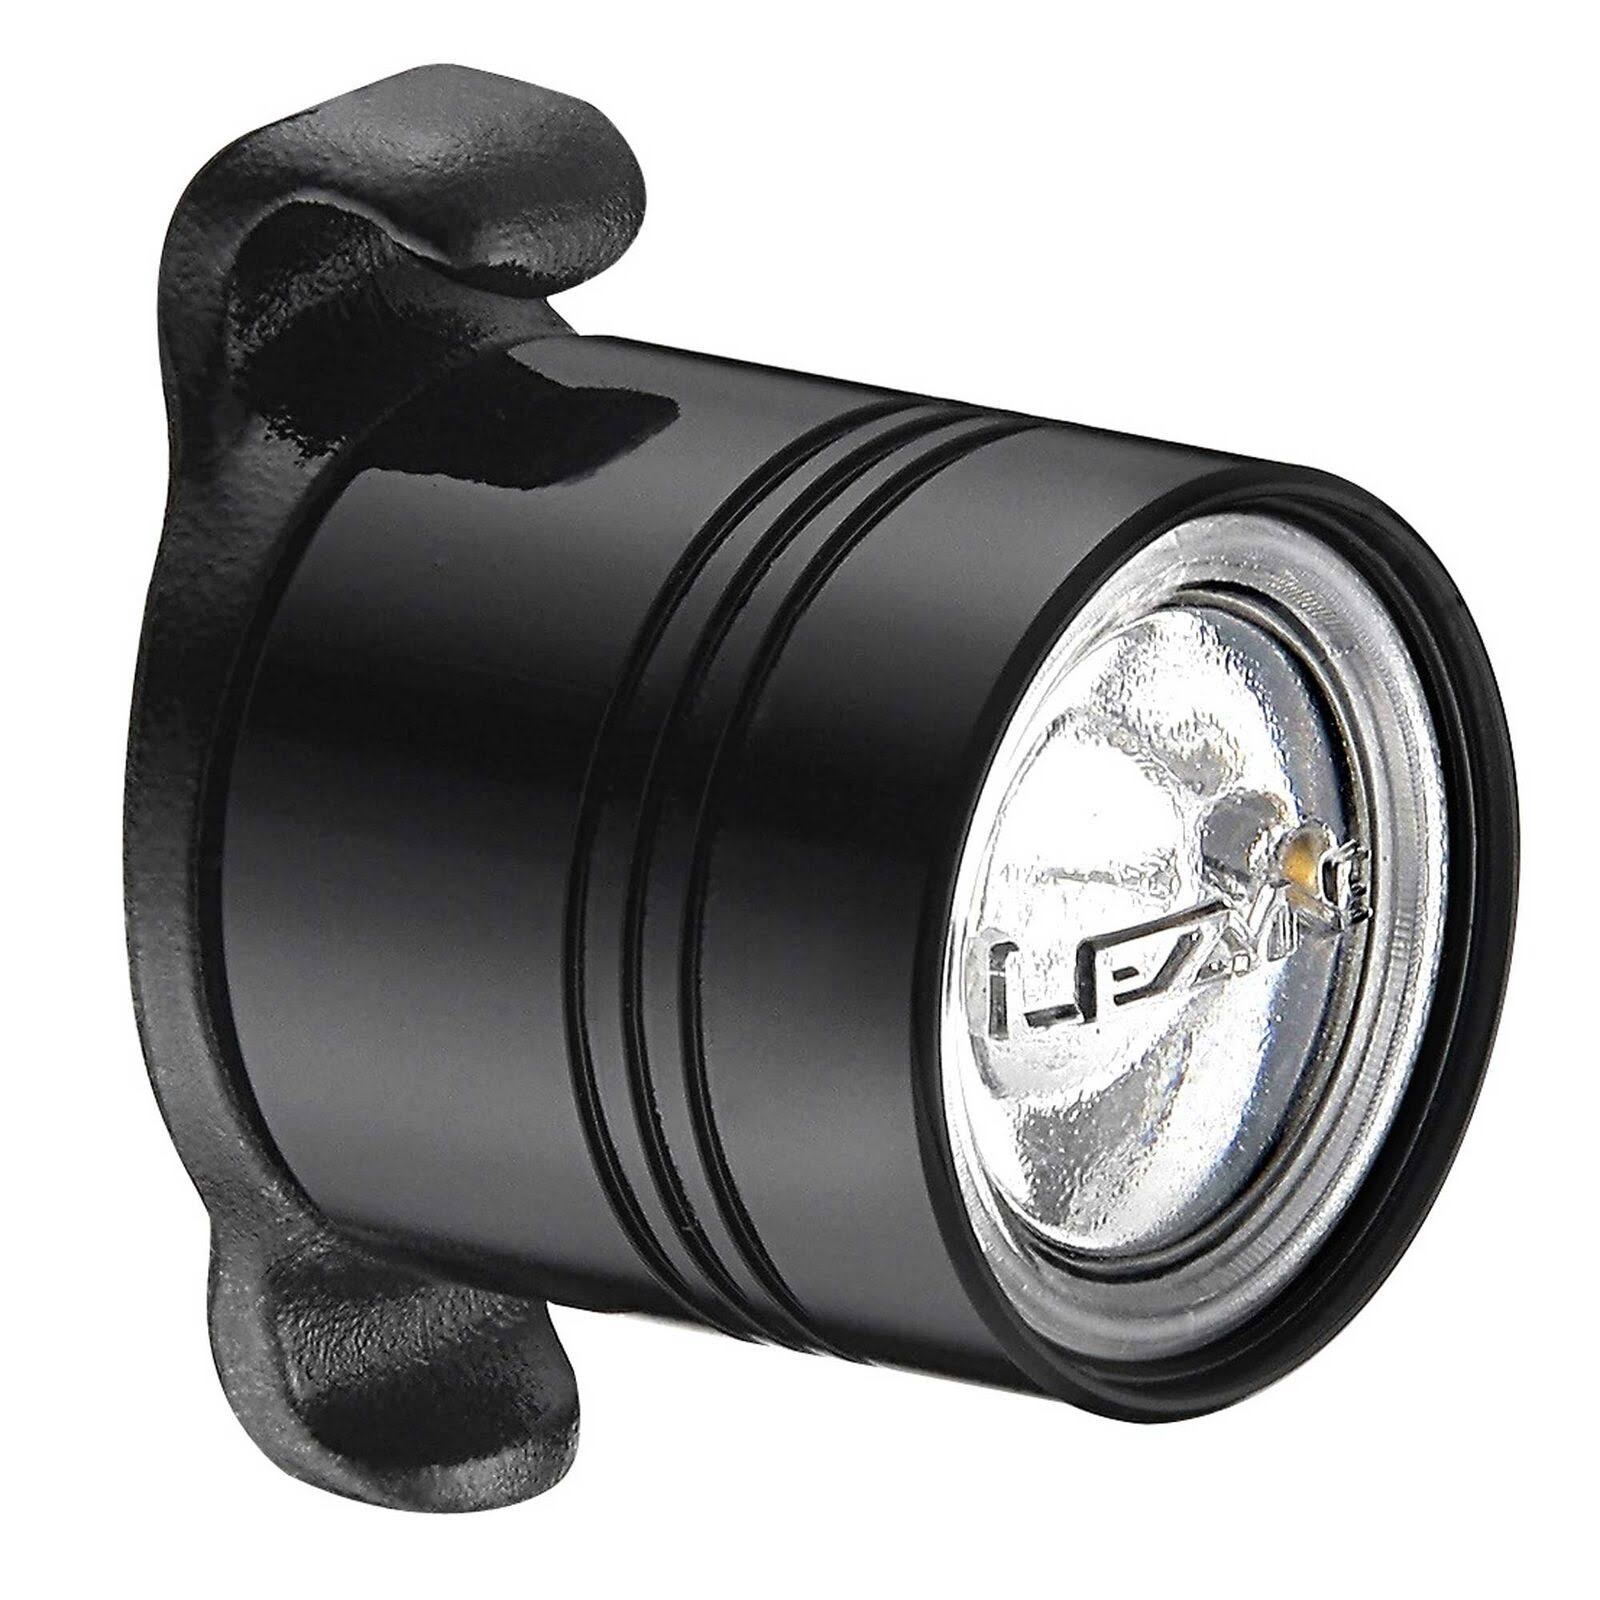 Lezyne Femto Drive Front Light - Black, 15lm